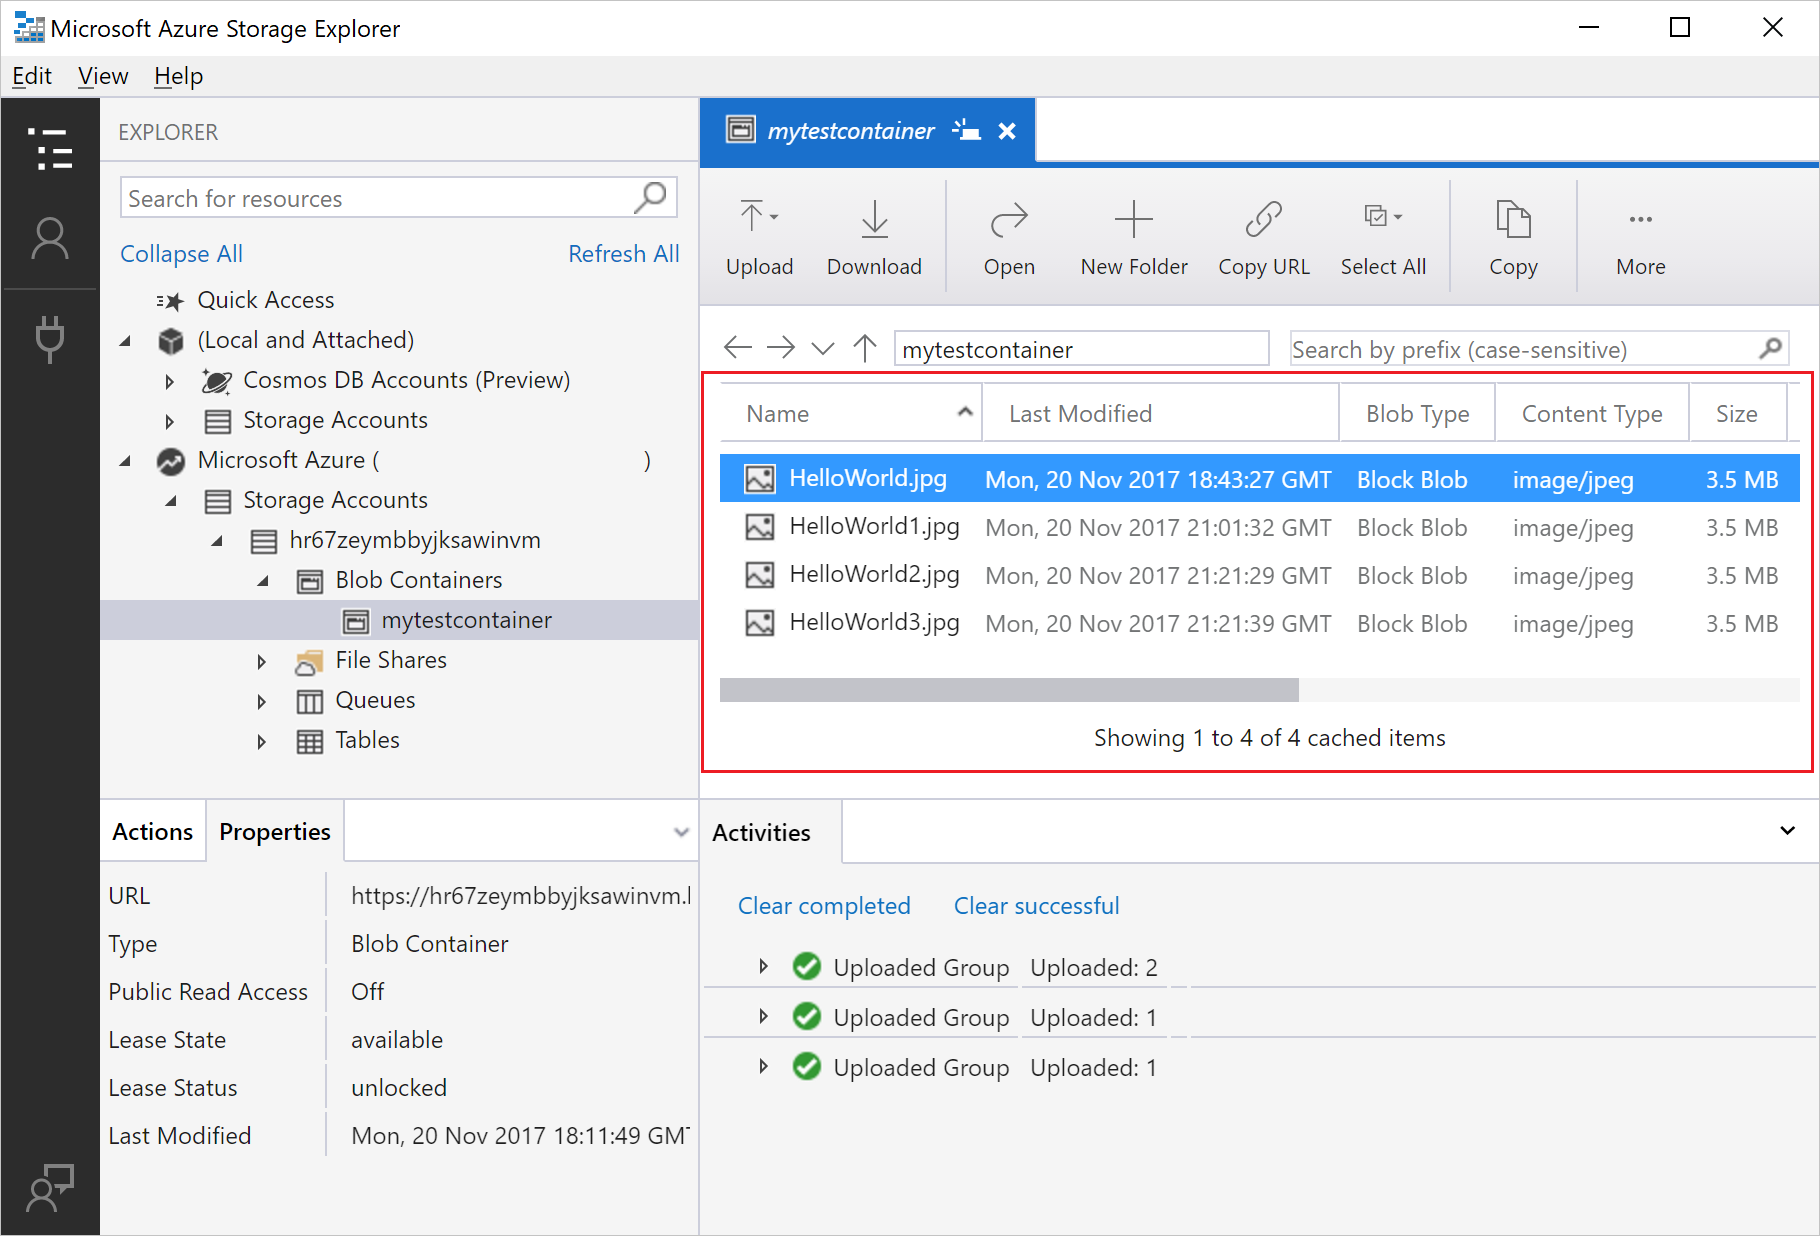 Screen shot of Azure Storage Explorer software.